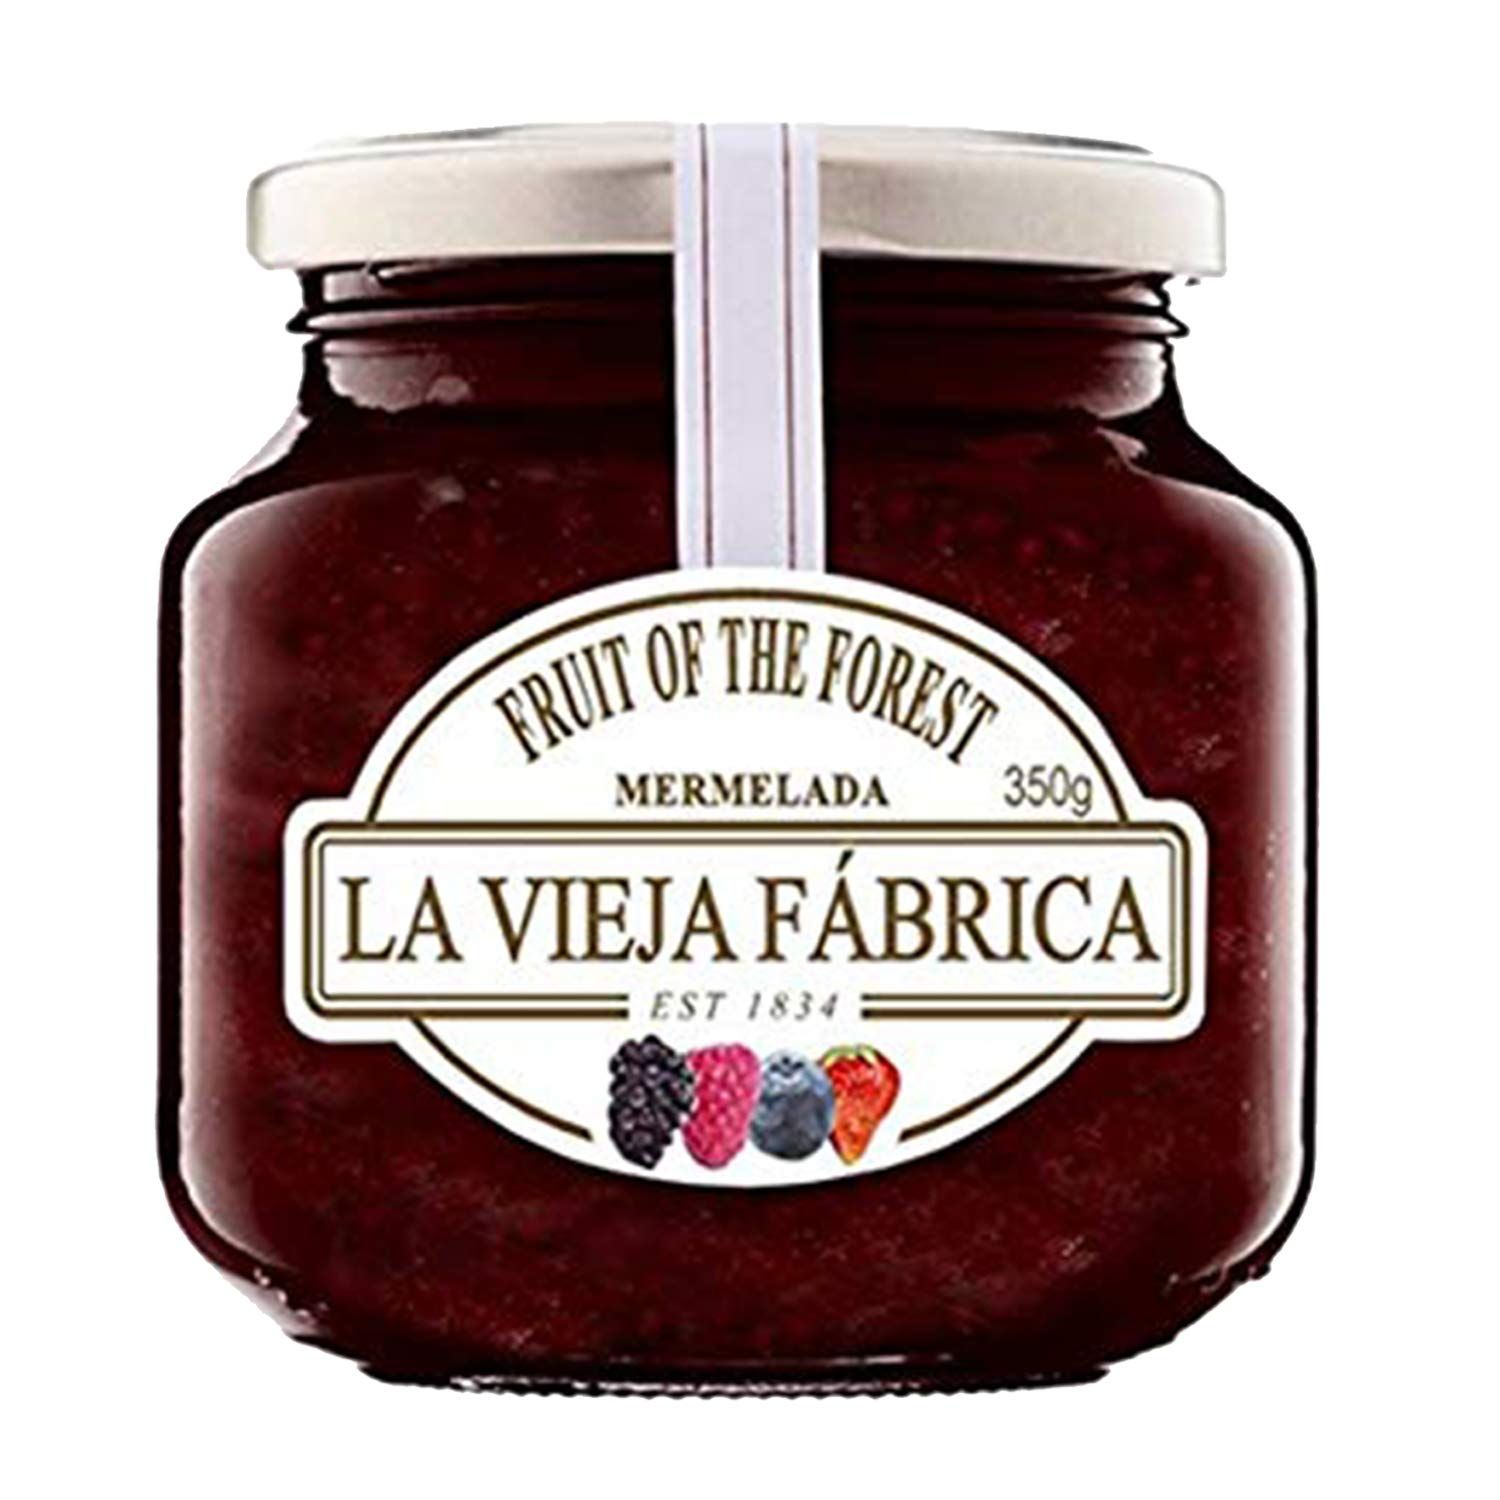 La Vieja Fabrica Fruit of The Forest Mermelada (Jam) Image